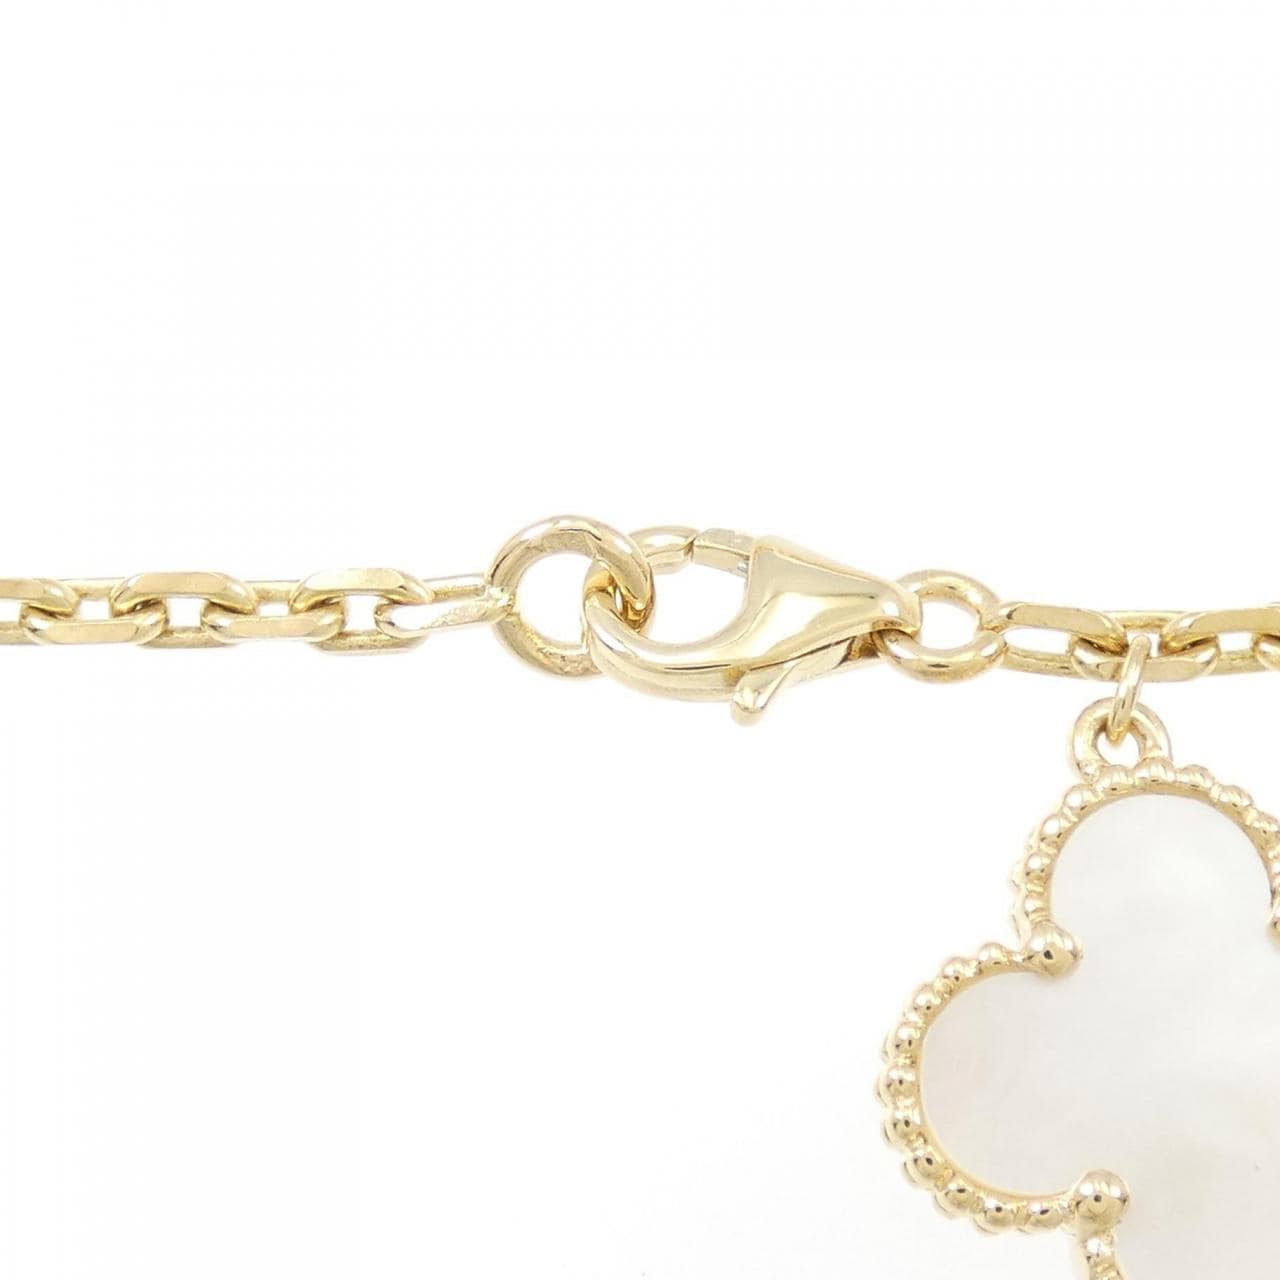 Van Cleef & Arpels Magic Alhambra Bracelet